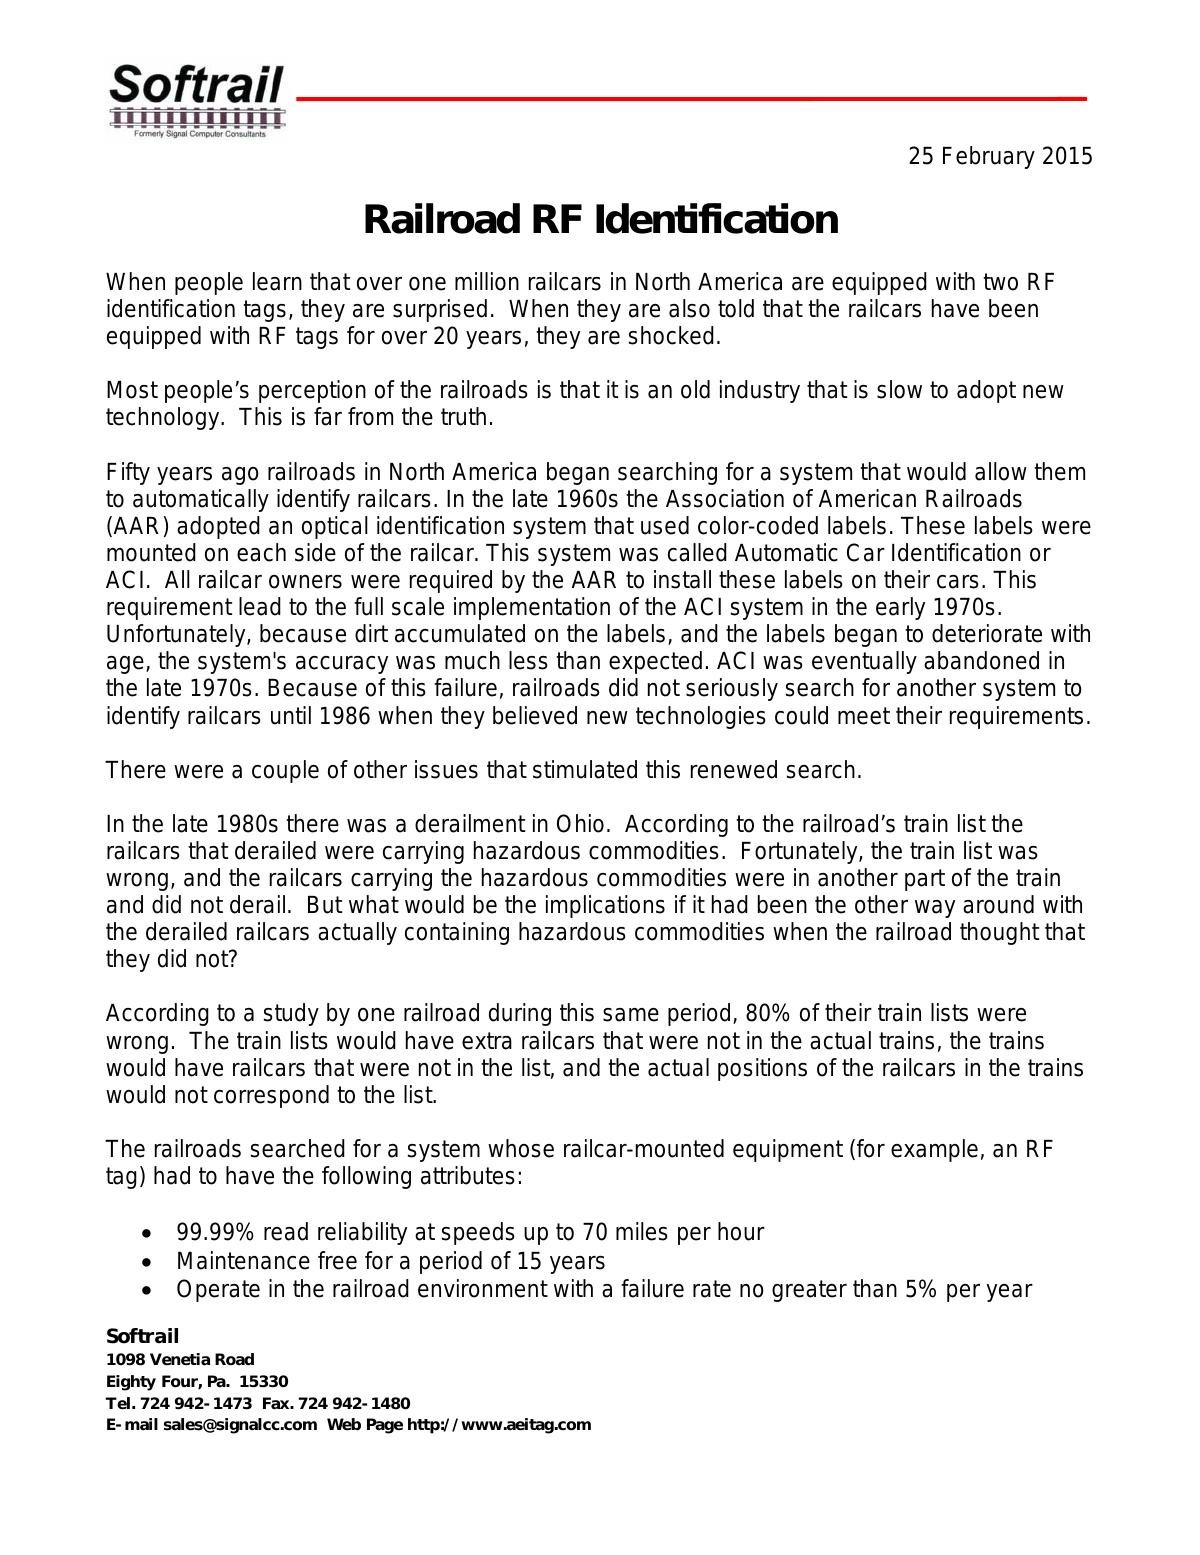 AEI RF Identification in the Railroad Industry